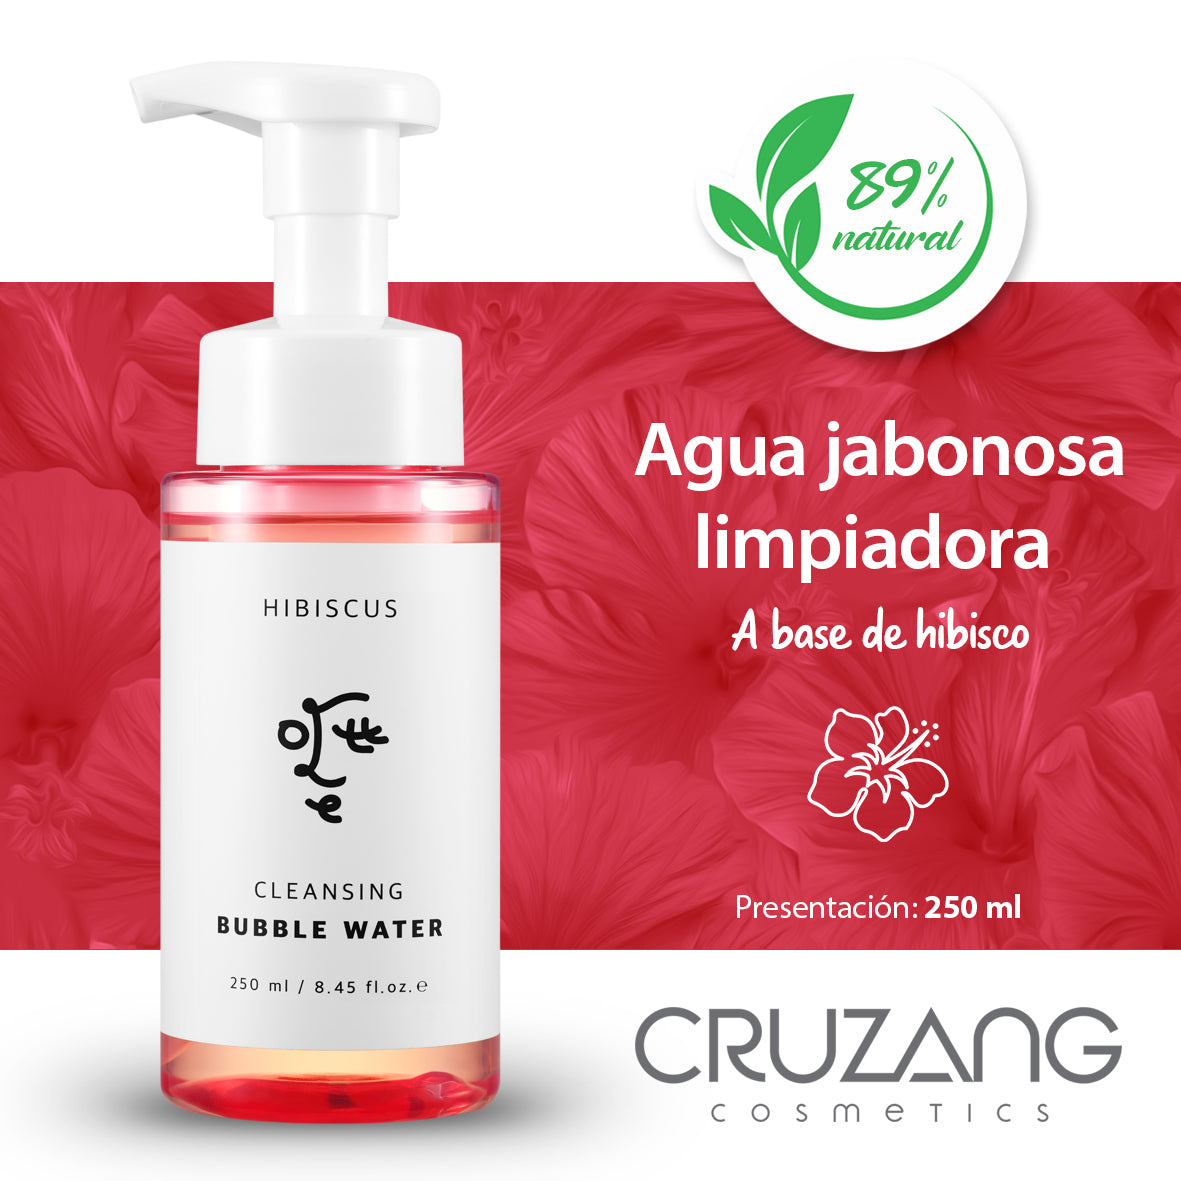 Ottíe Hibiscus cleansing bubble water - Agua jabonosa limpiadora a base de hibisco